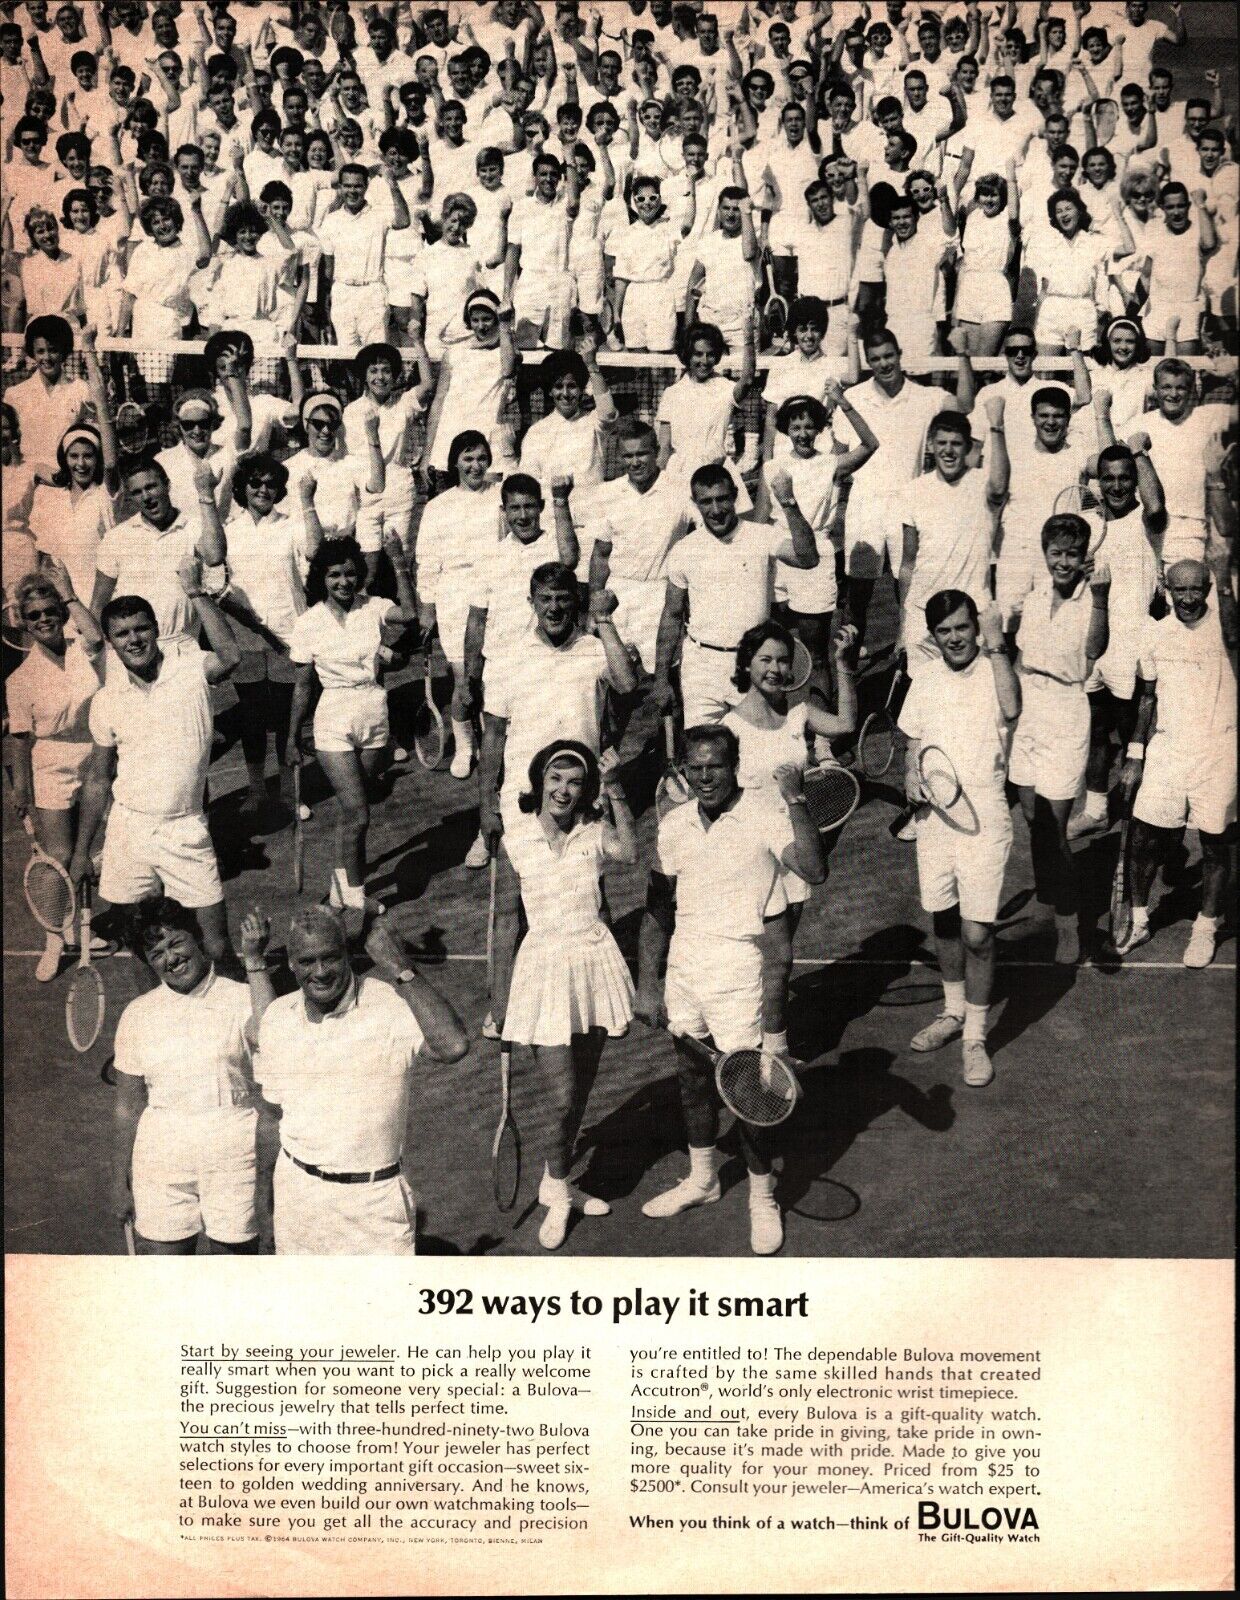 1964 Bulova Watches Vintage Print Ad  392 tennis players Wearing Bulova Watches